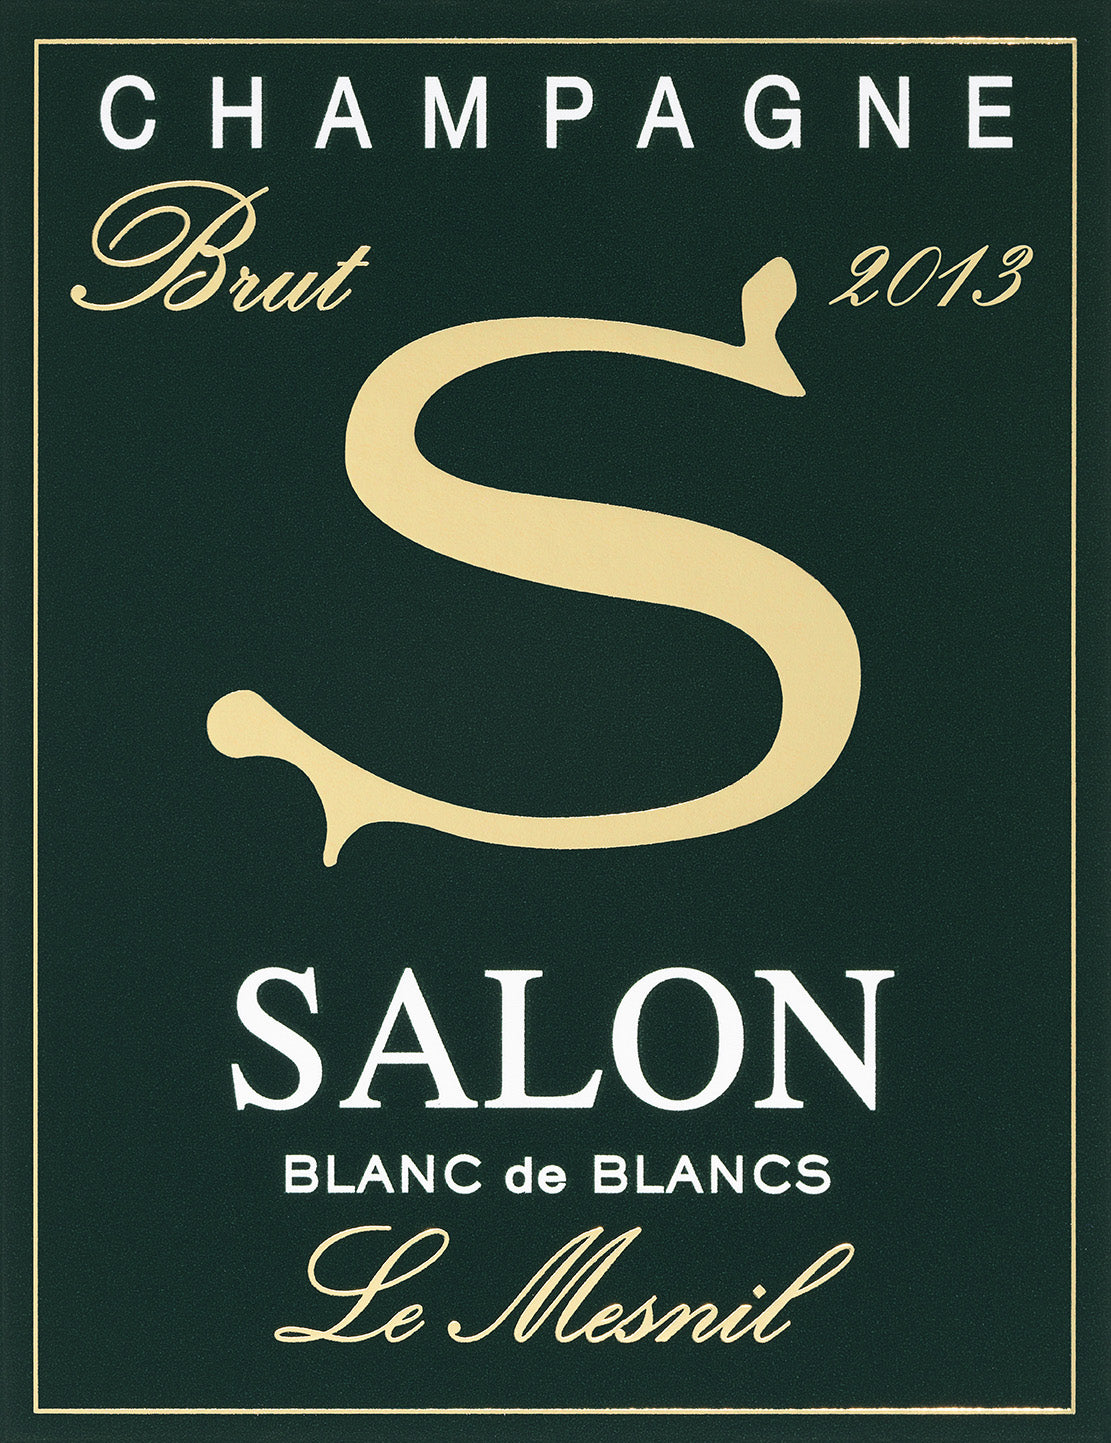 Salon "Le Mesnil" Blanc de Blancs Champagne (2012)